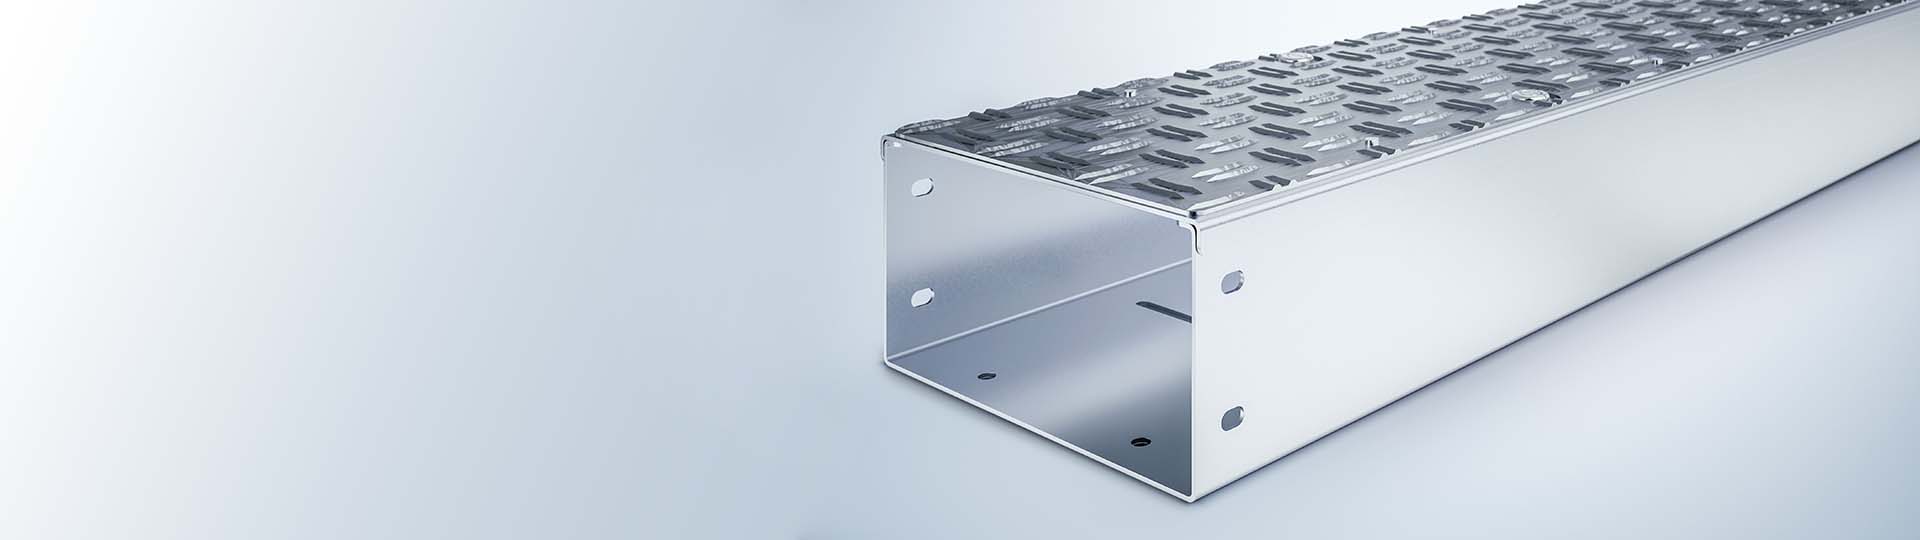 Cabling trunking - PFLITSCH GmbH & Co. KG - steel / rigid